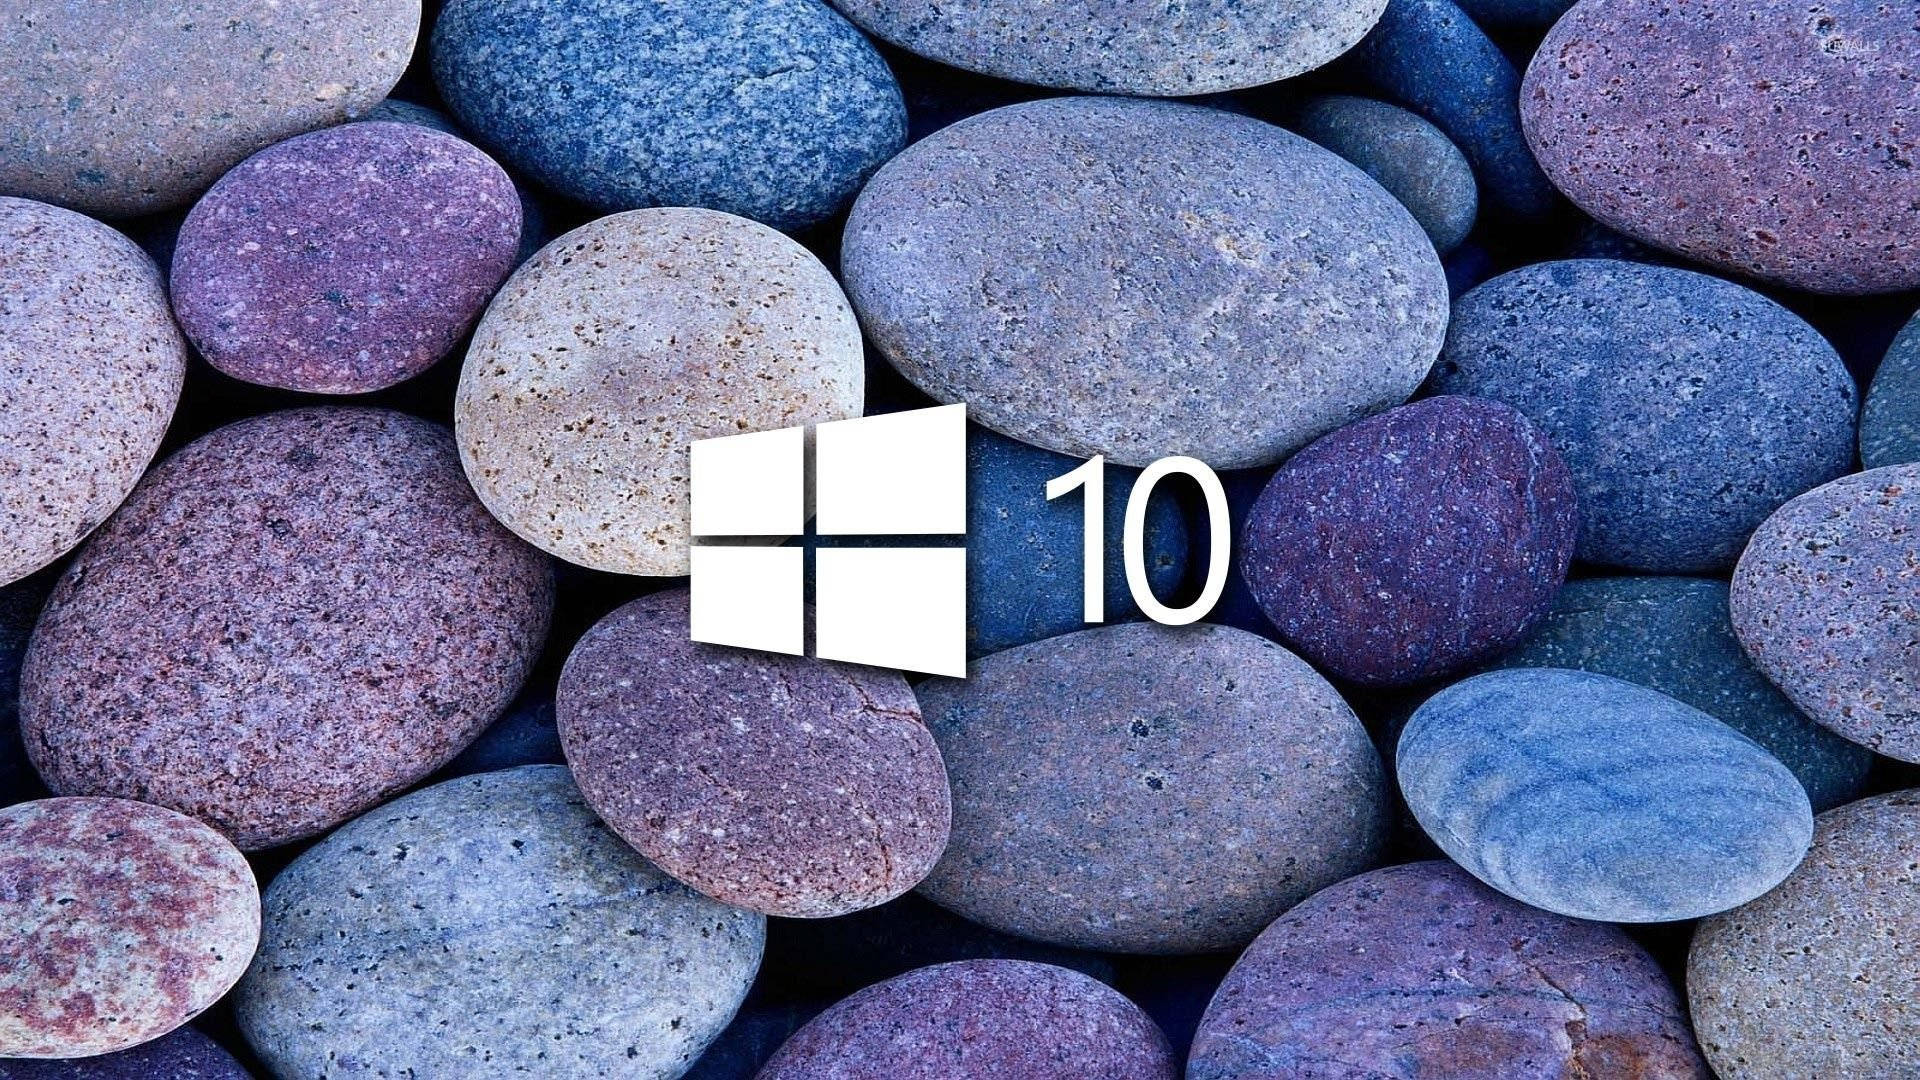 Windows 10 Hd Cold Stones Wallpaper